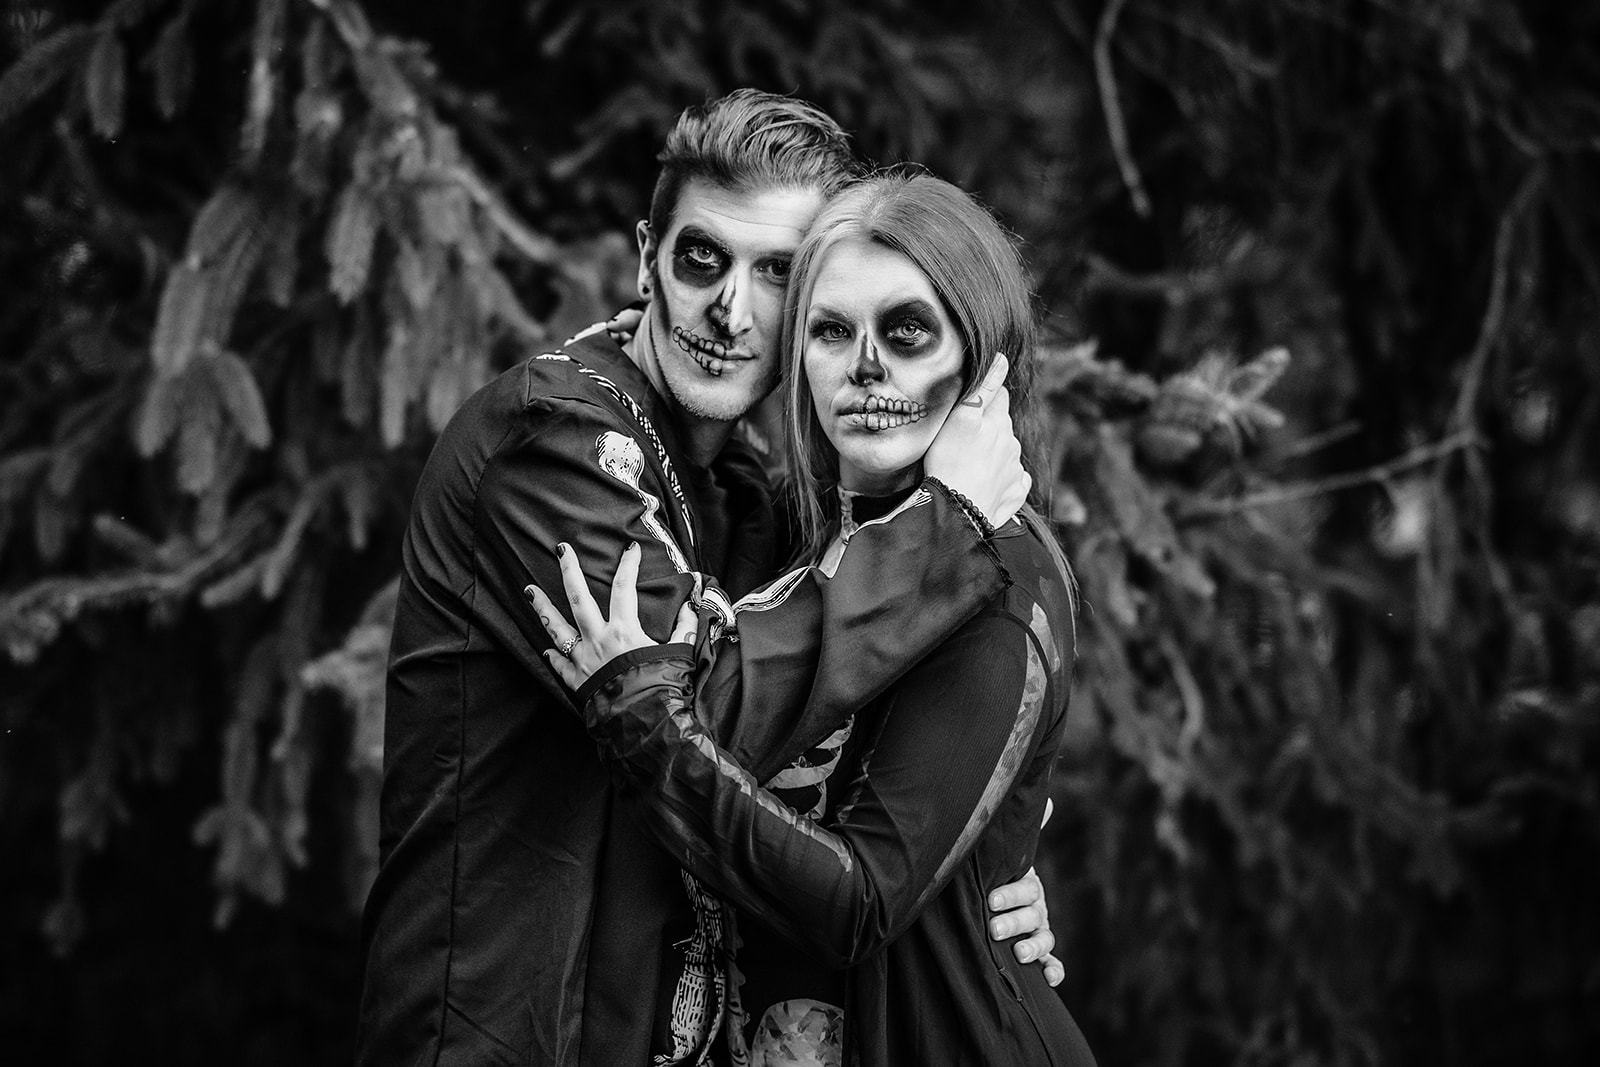 fall autumn Wyomissing Park spooky Halloween engagement session costume makeup bride groom Berks County Pennsylvania